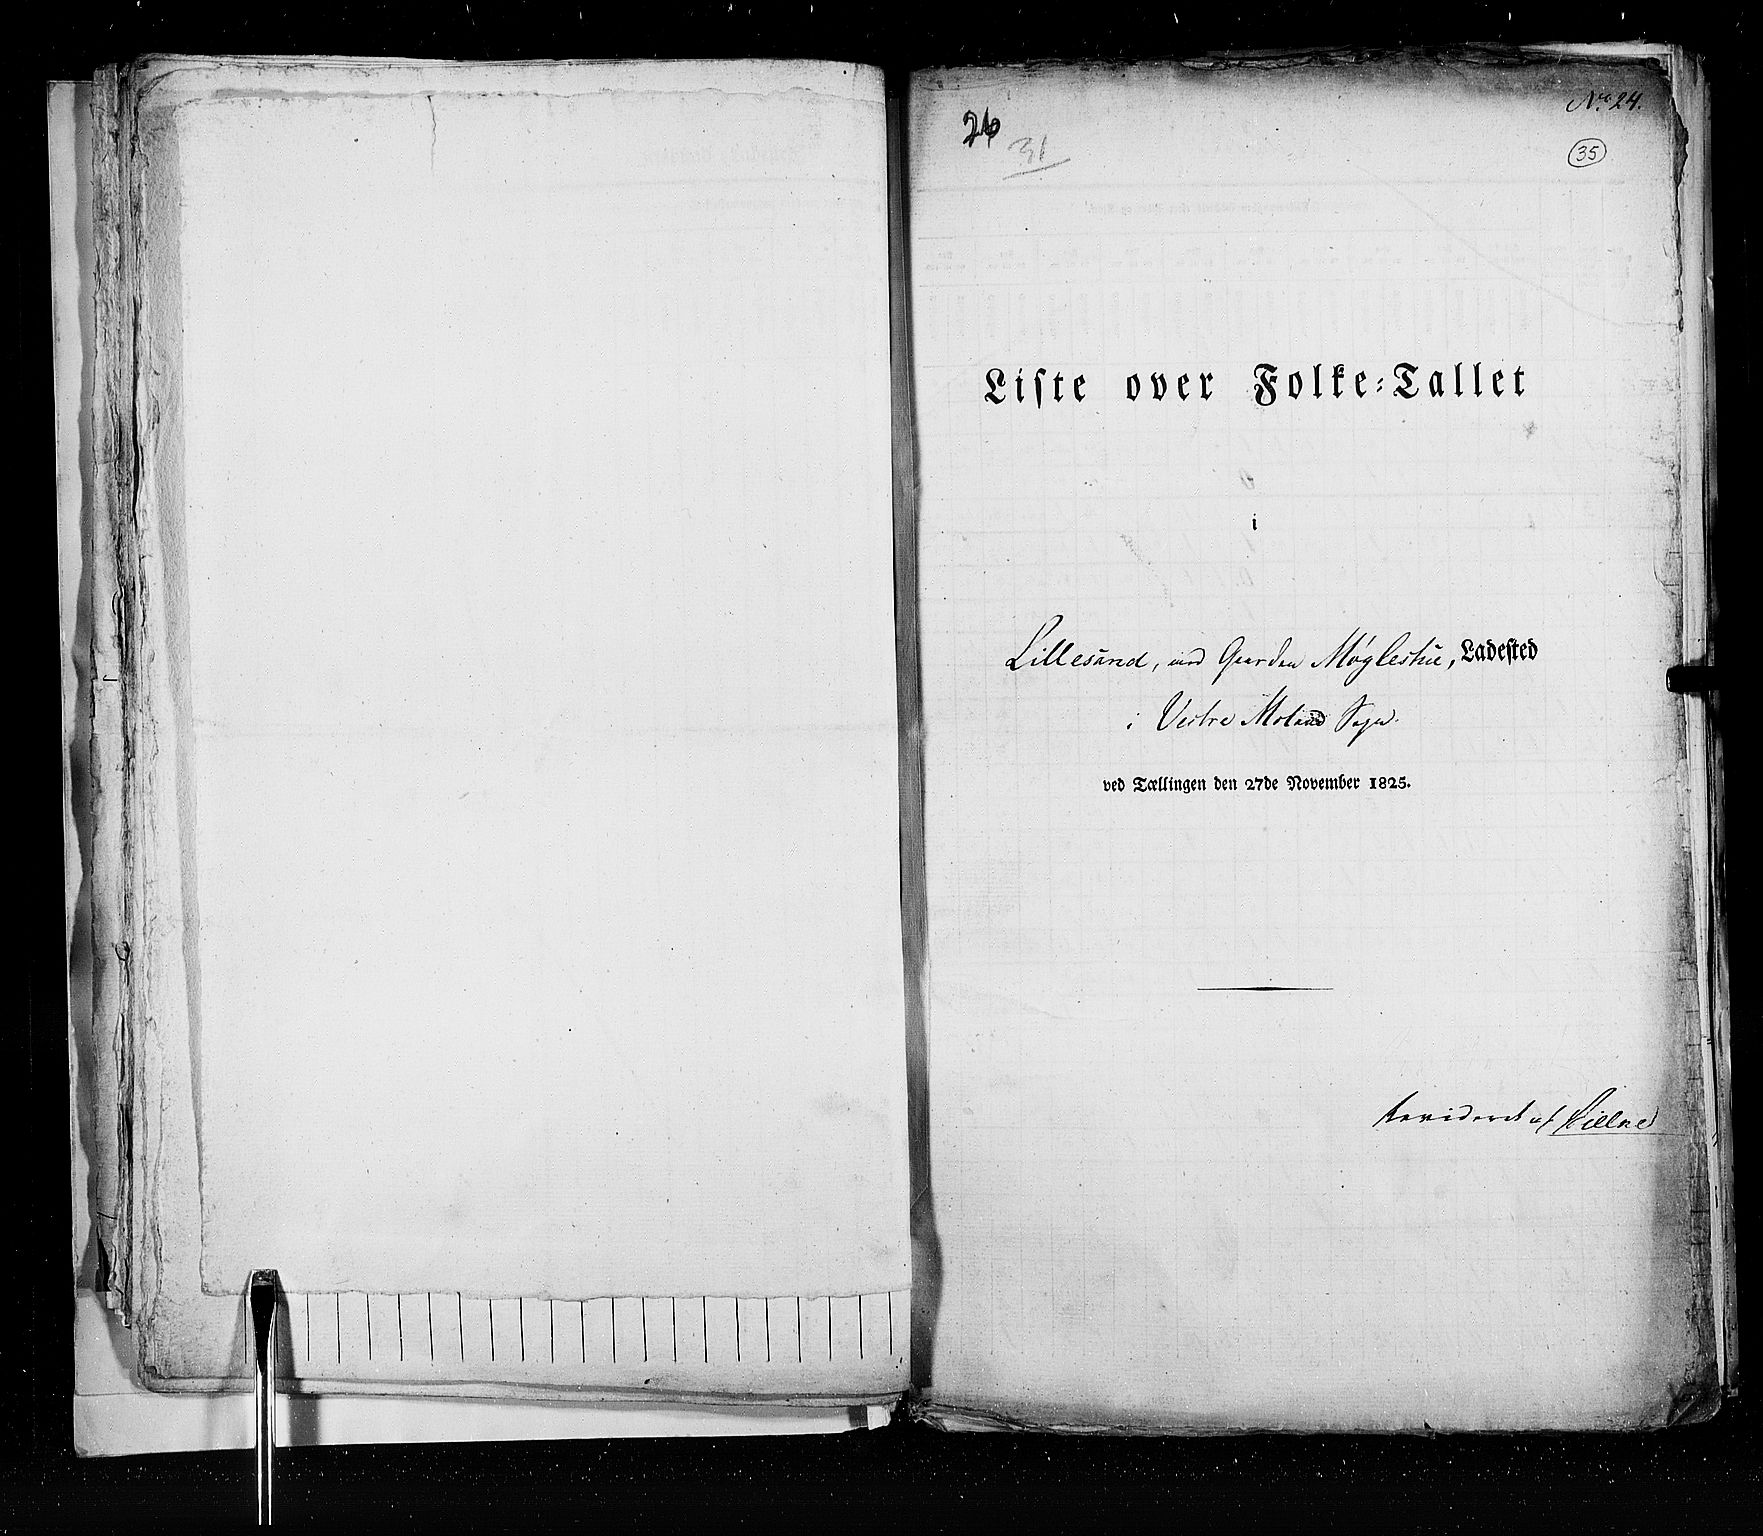 RA, Census 1825, vol. 21: Risør-Vardø, 1825, p. 35